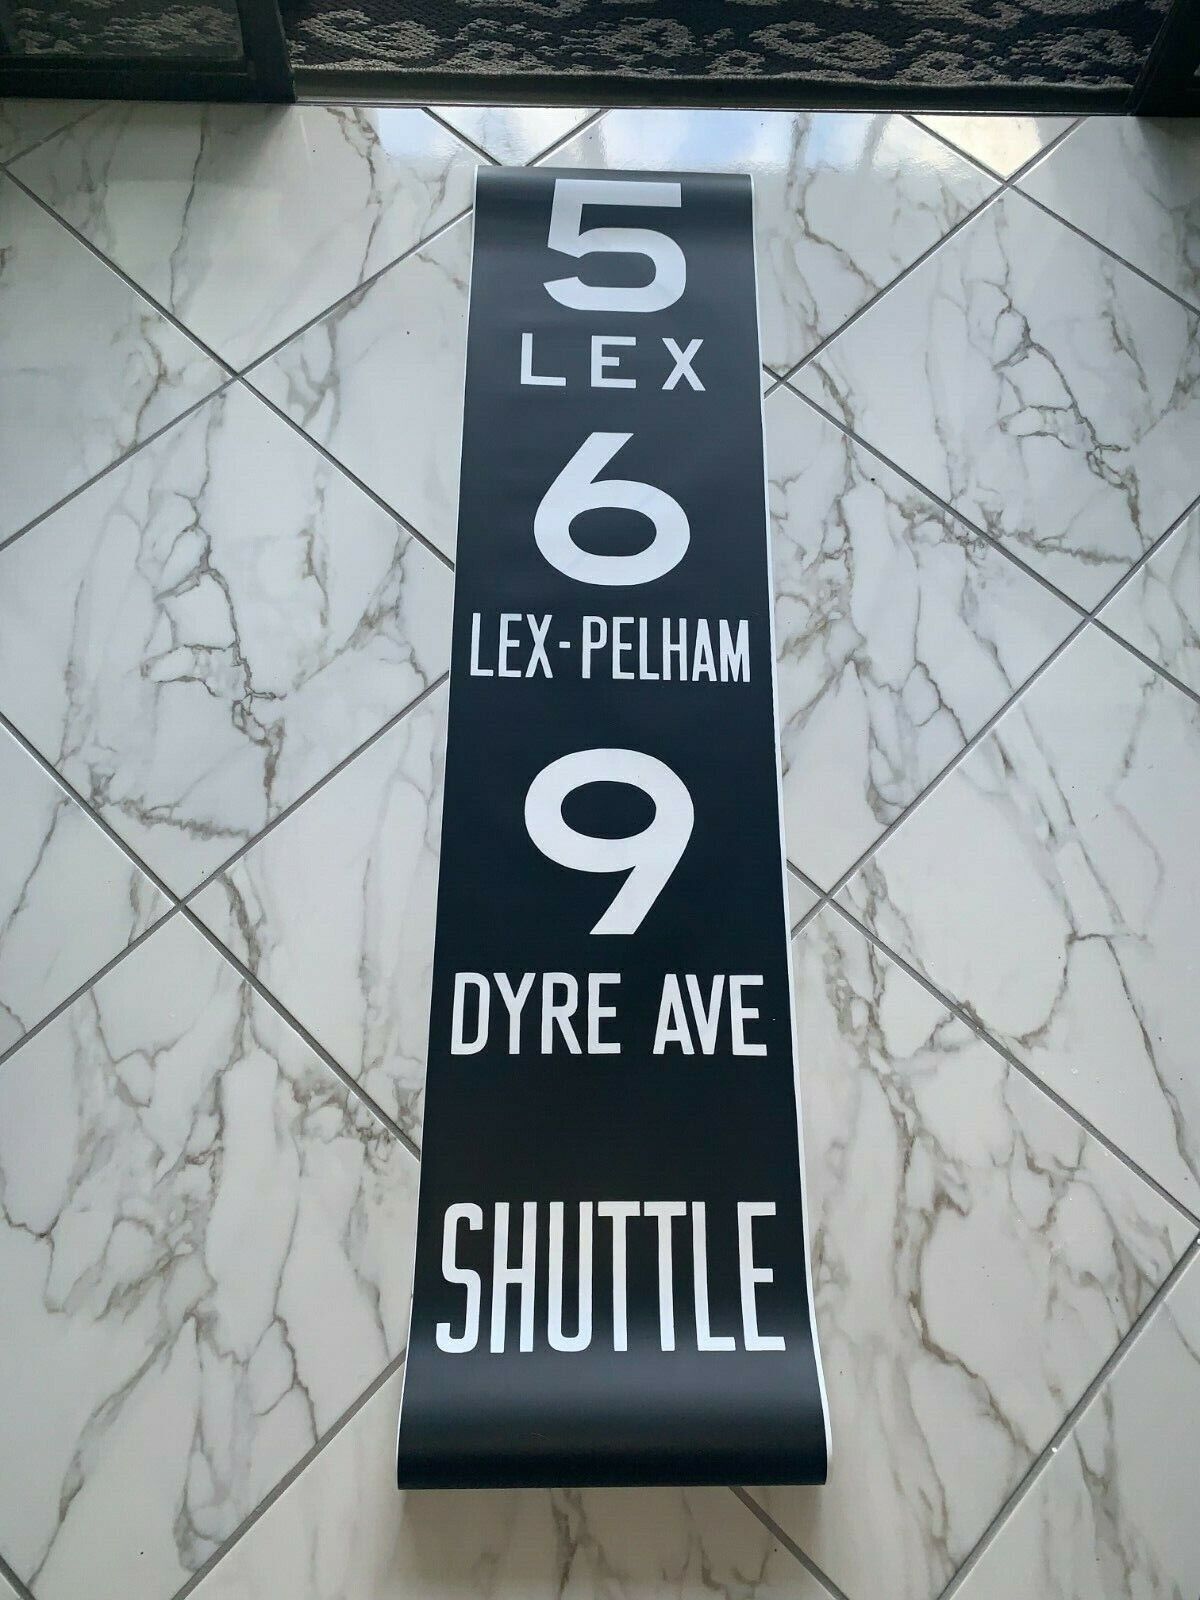 IRT NY NYC SUBWAY ROLL SIGN LEXINGTON AVENUE PELHAM DYRE BRONX MANHATTAN SHUTTLE